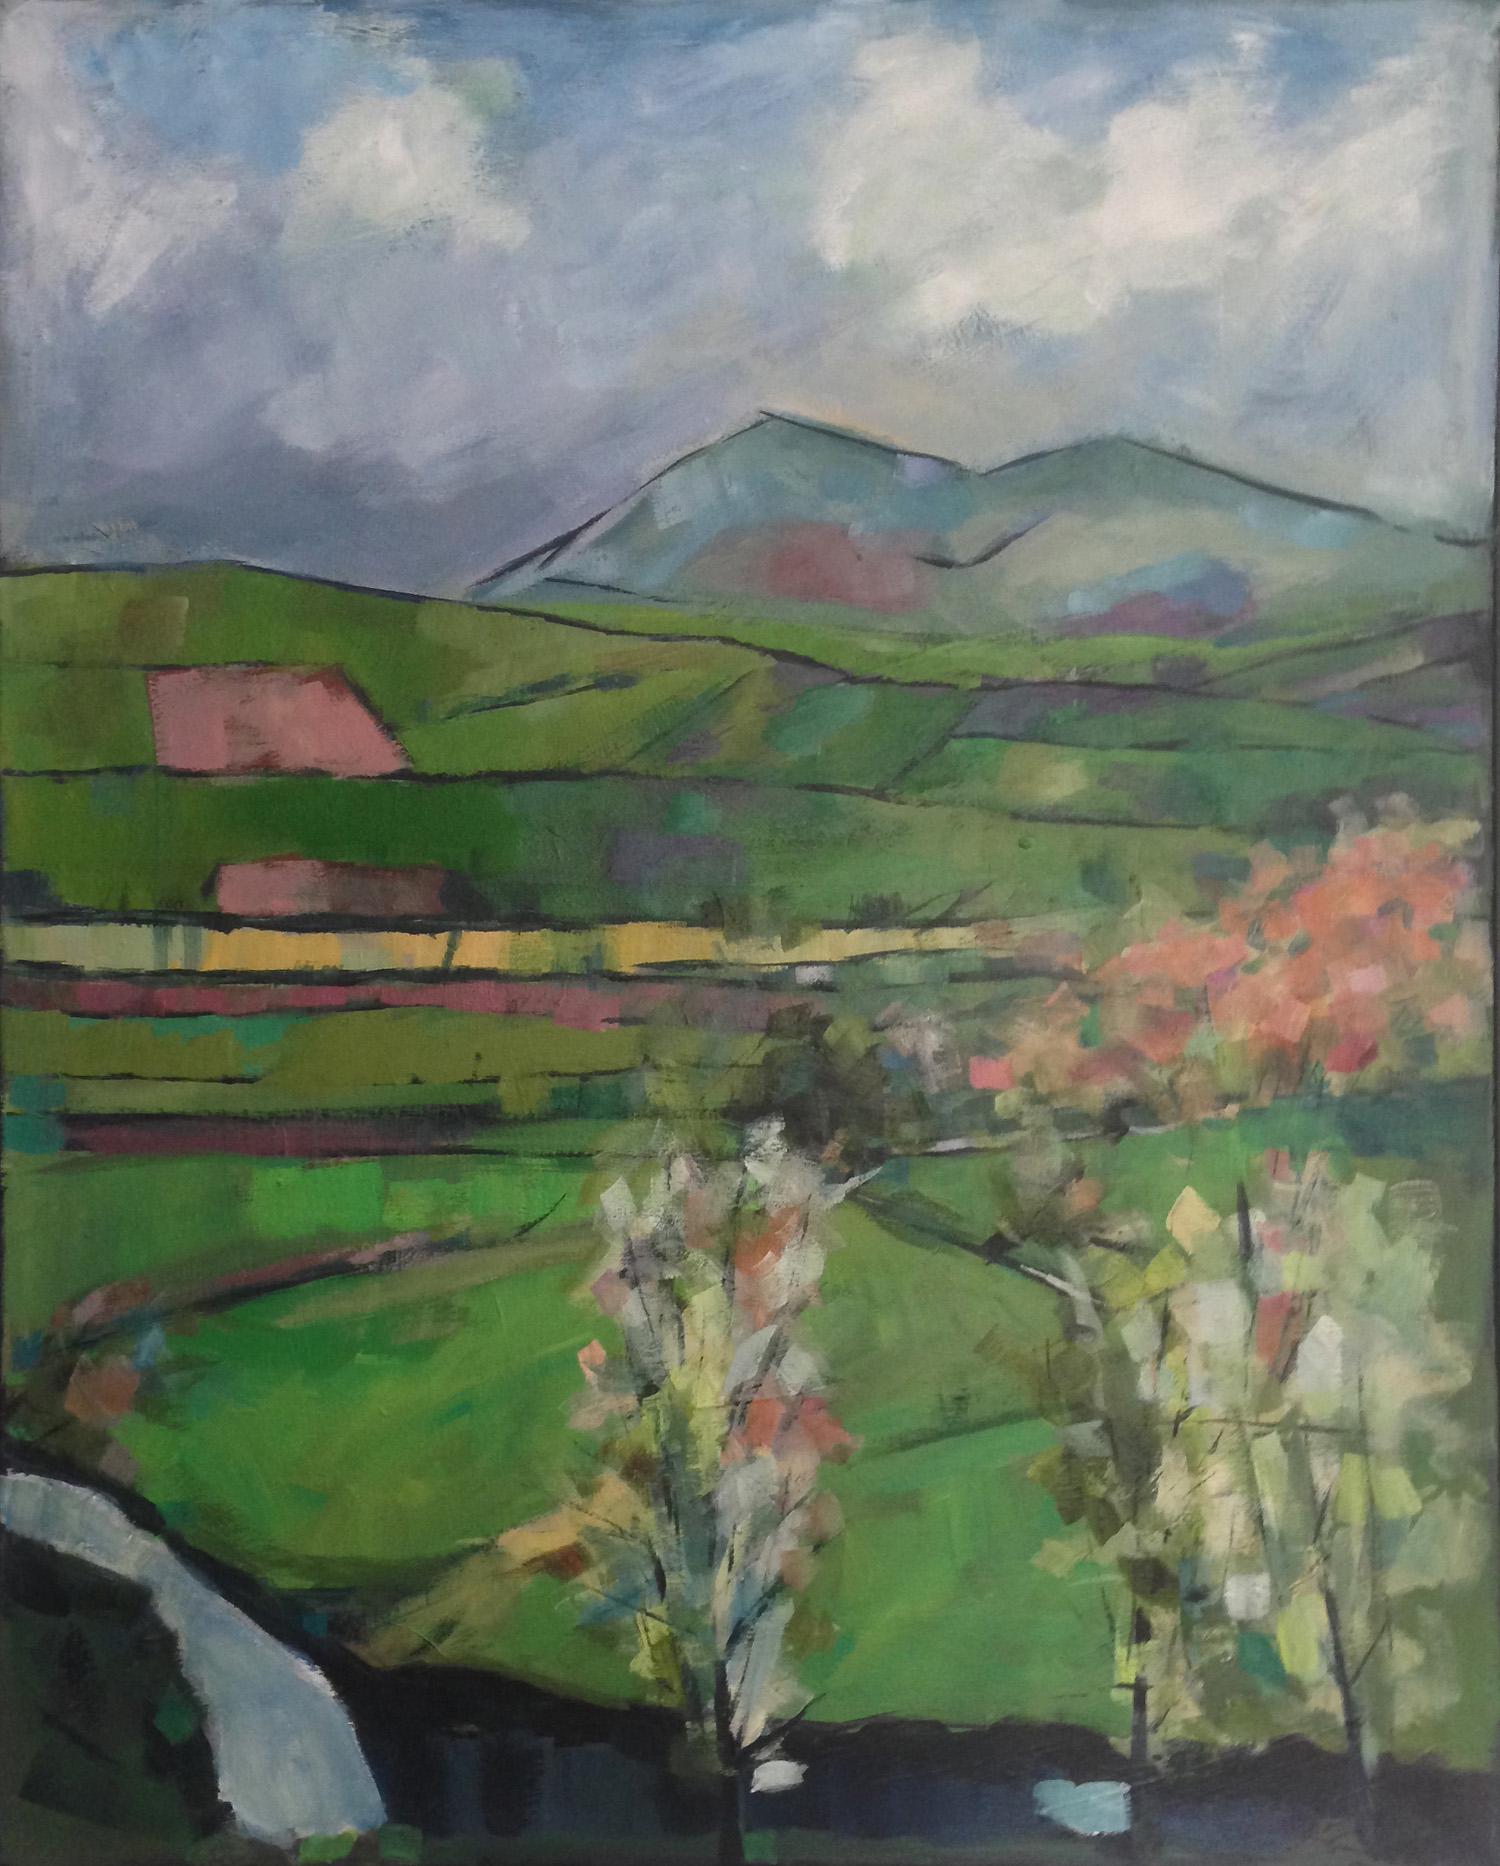 Stuart Roper Landscape Painting - Spring over Ffrwdwen brook, a mixed media landscape painting